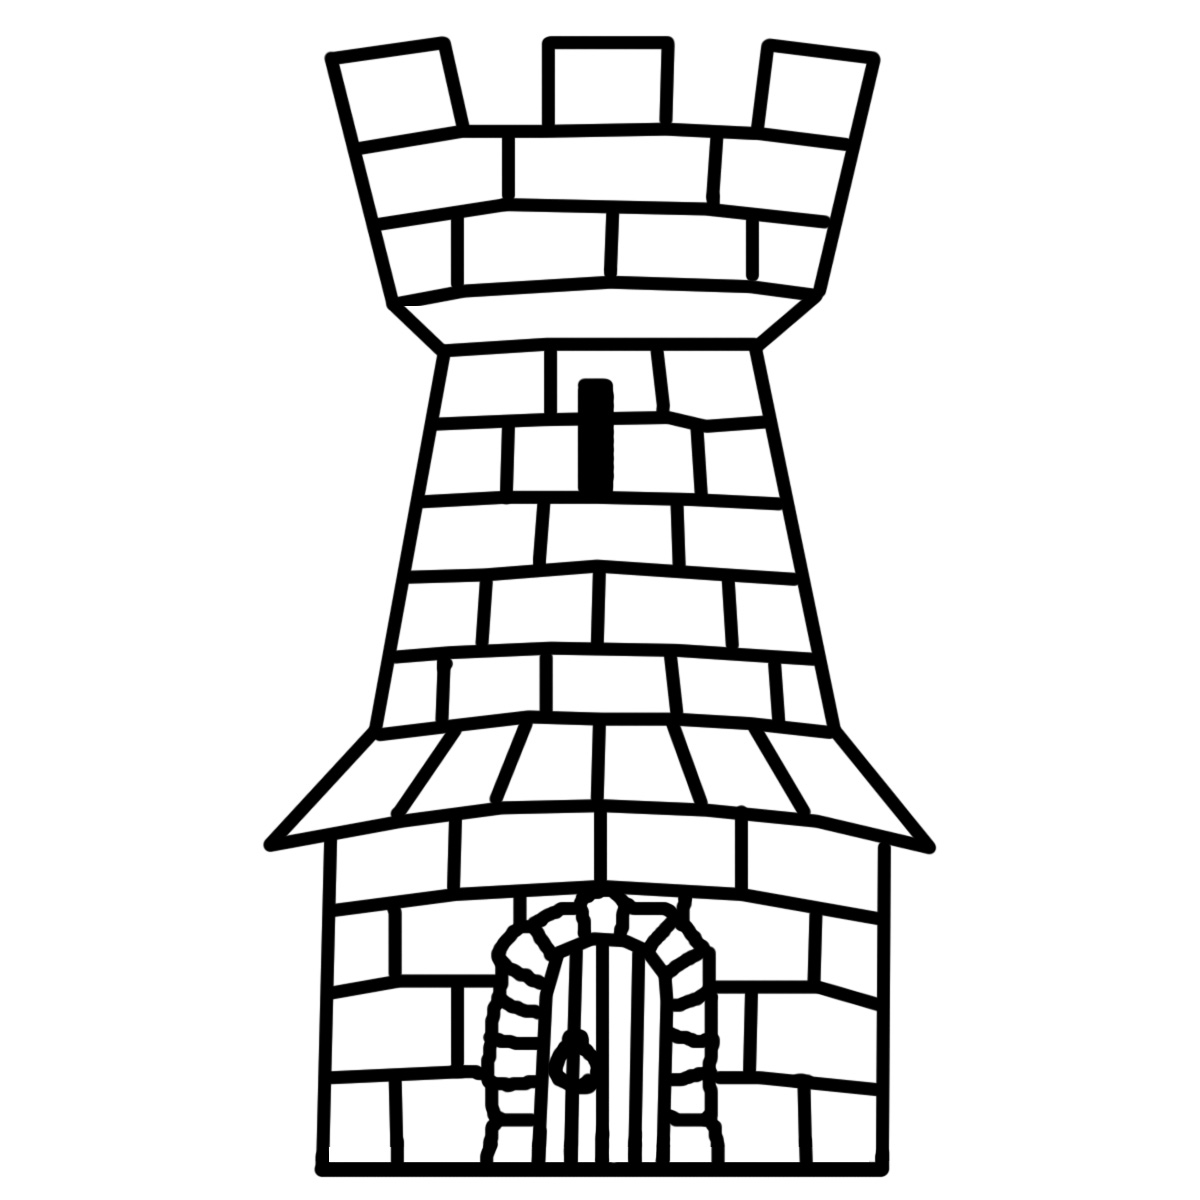 Heraldry castle clipart